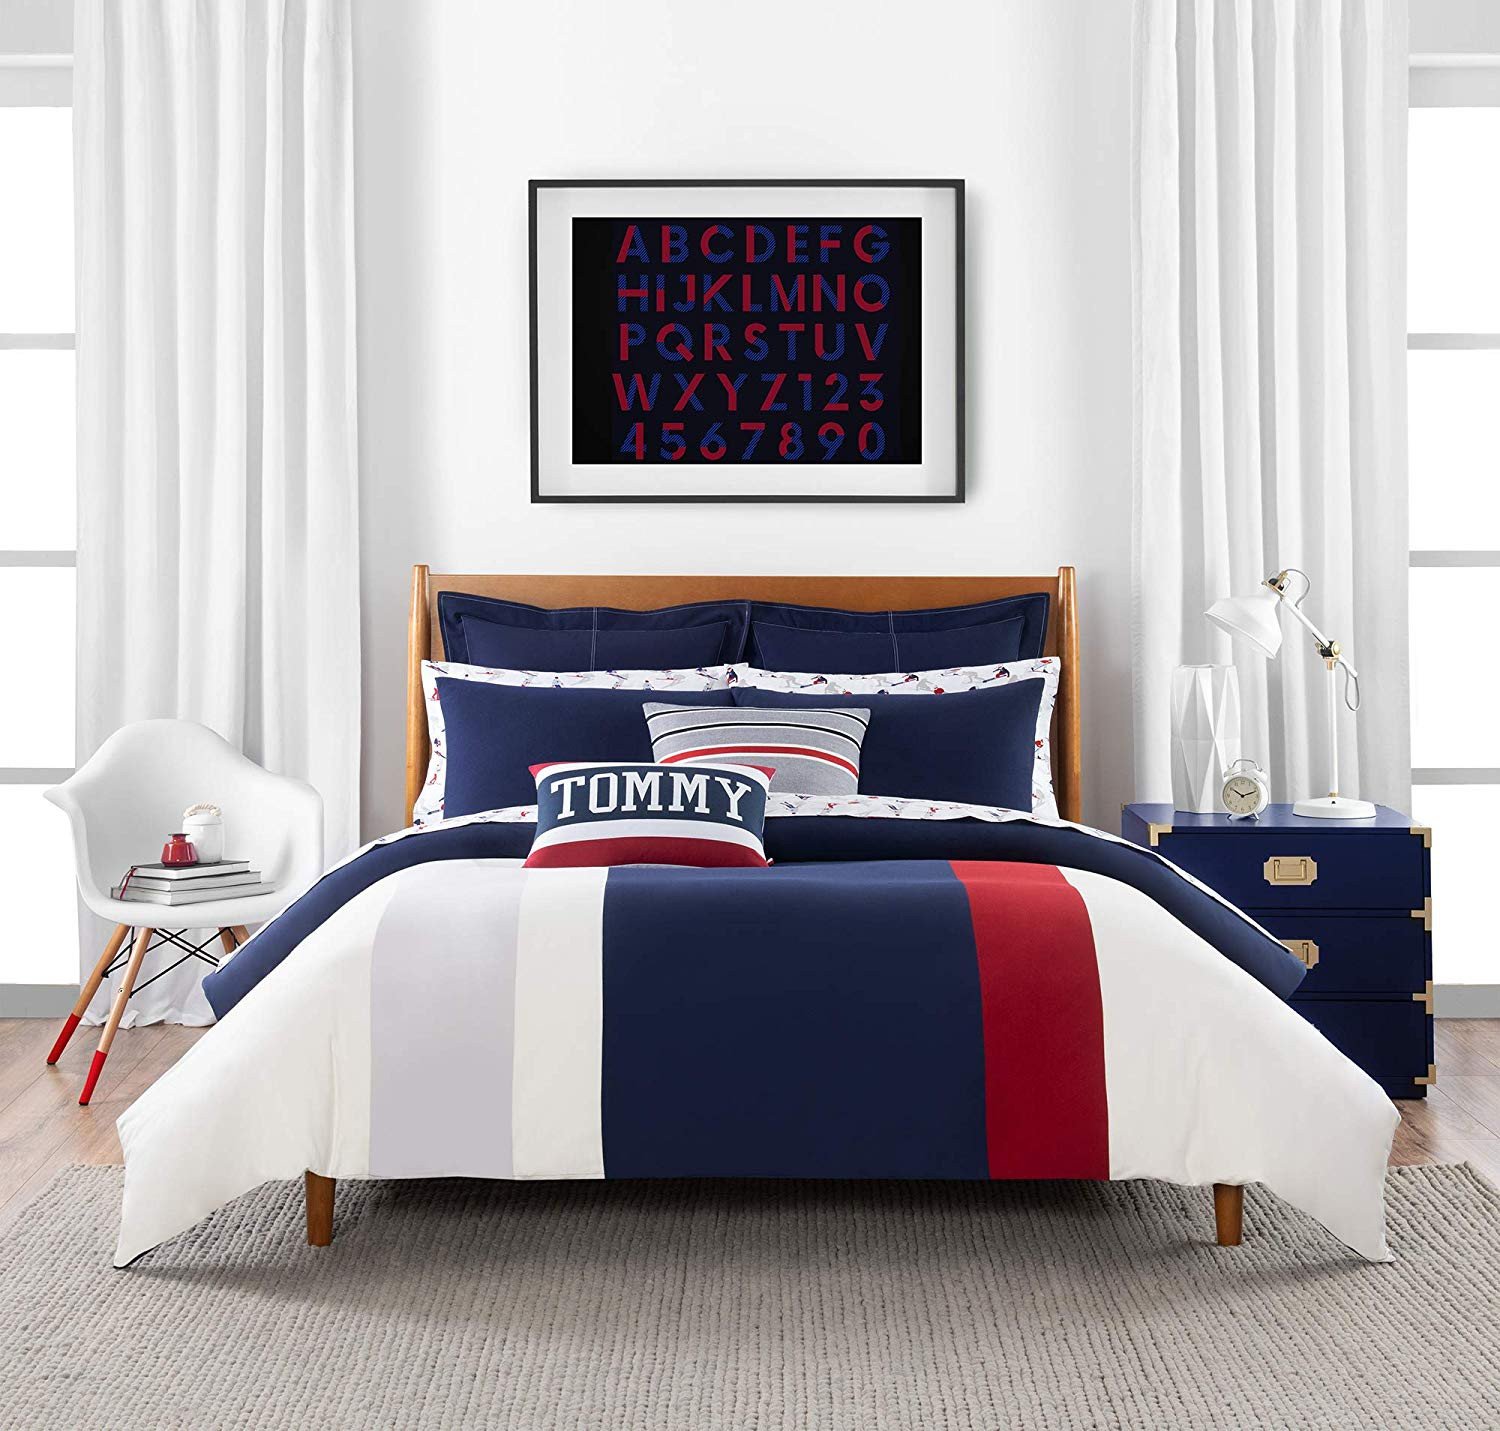 Full Size Bedroom Set On Sale Beautiful Amazon tommy Hilfiger Clash Of 85 Stripe Bedding